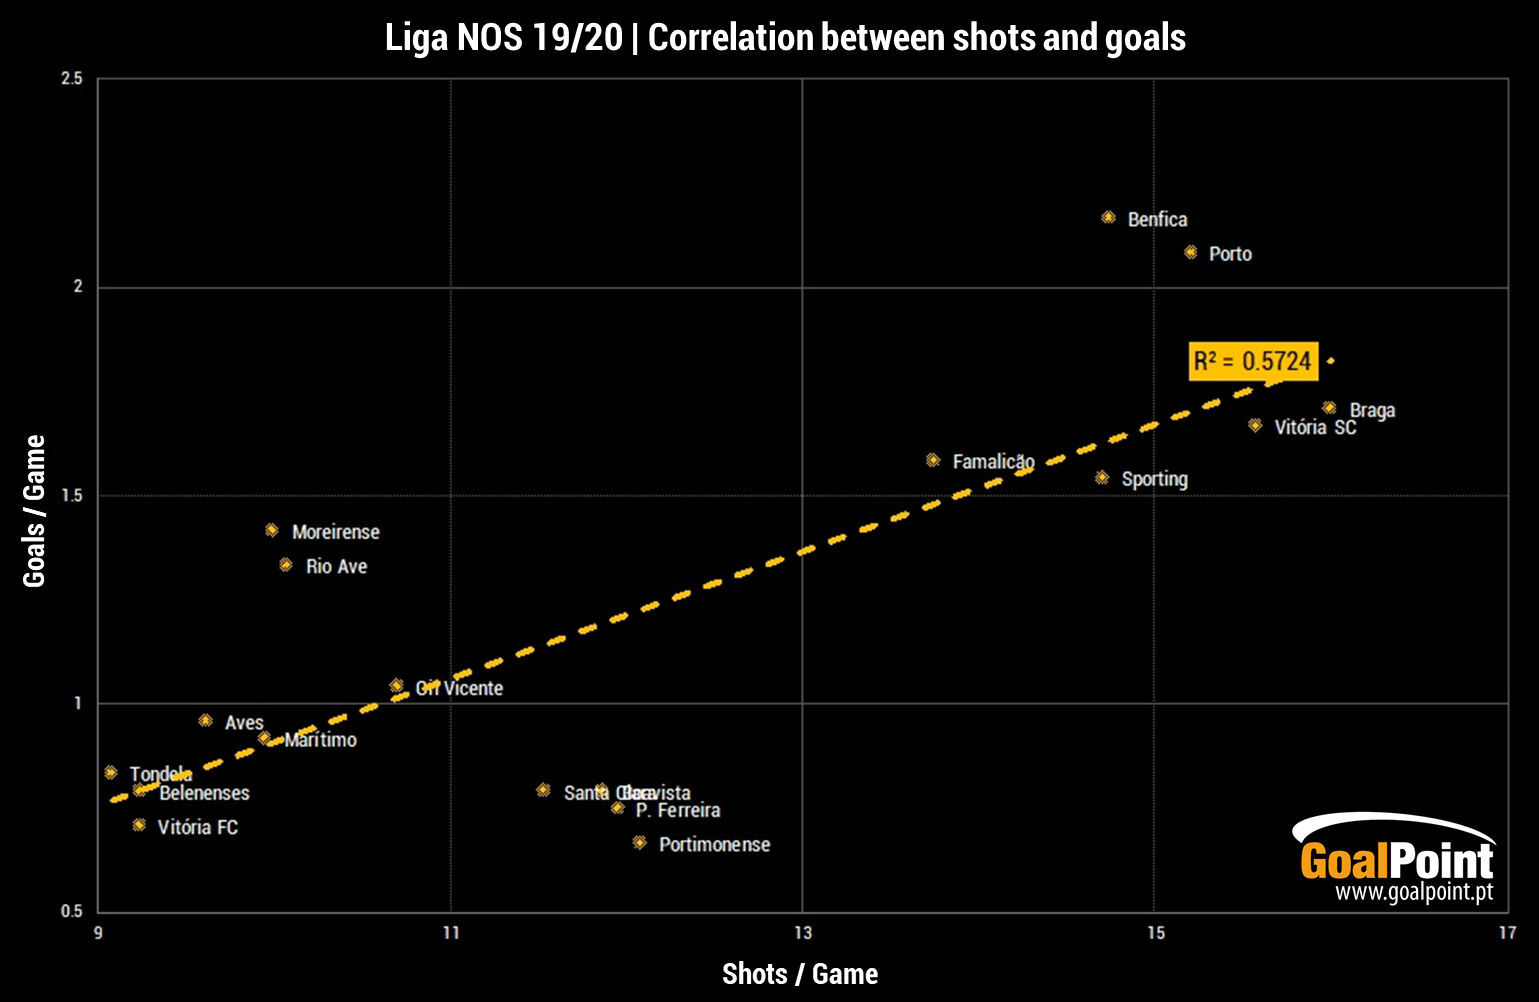 GoalPoint-LigaNOS1920-Correlation-Shots-Goals-EN